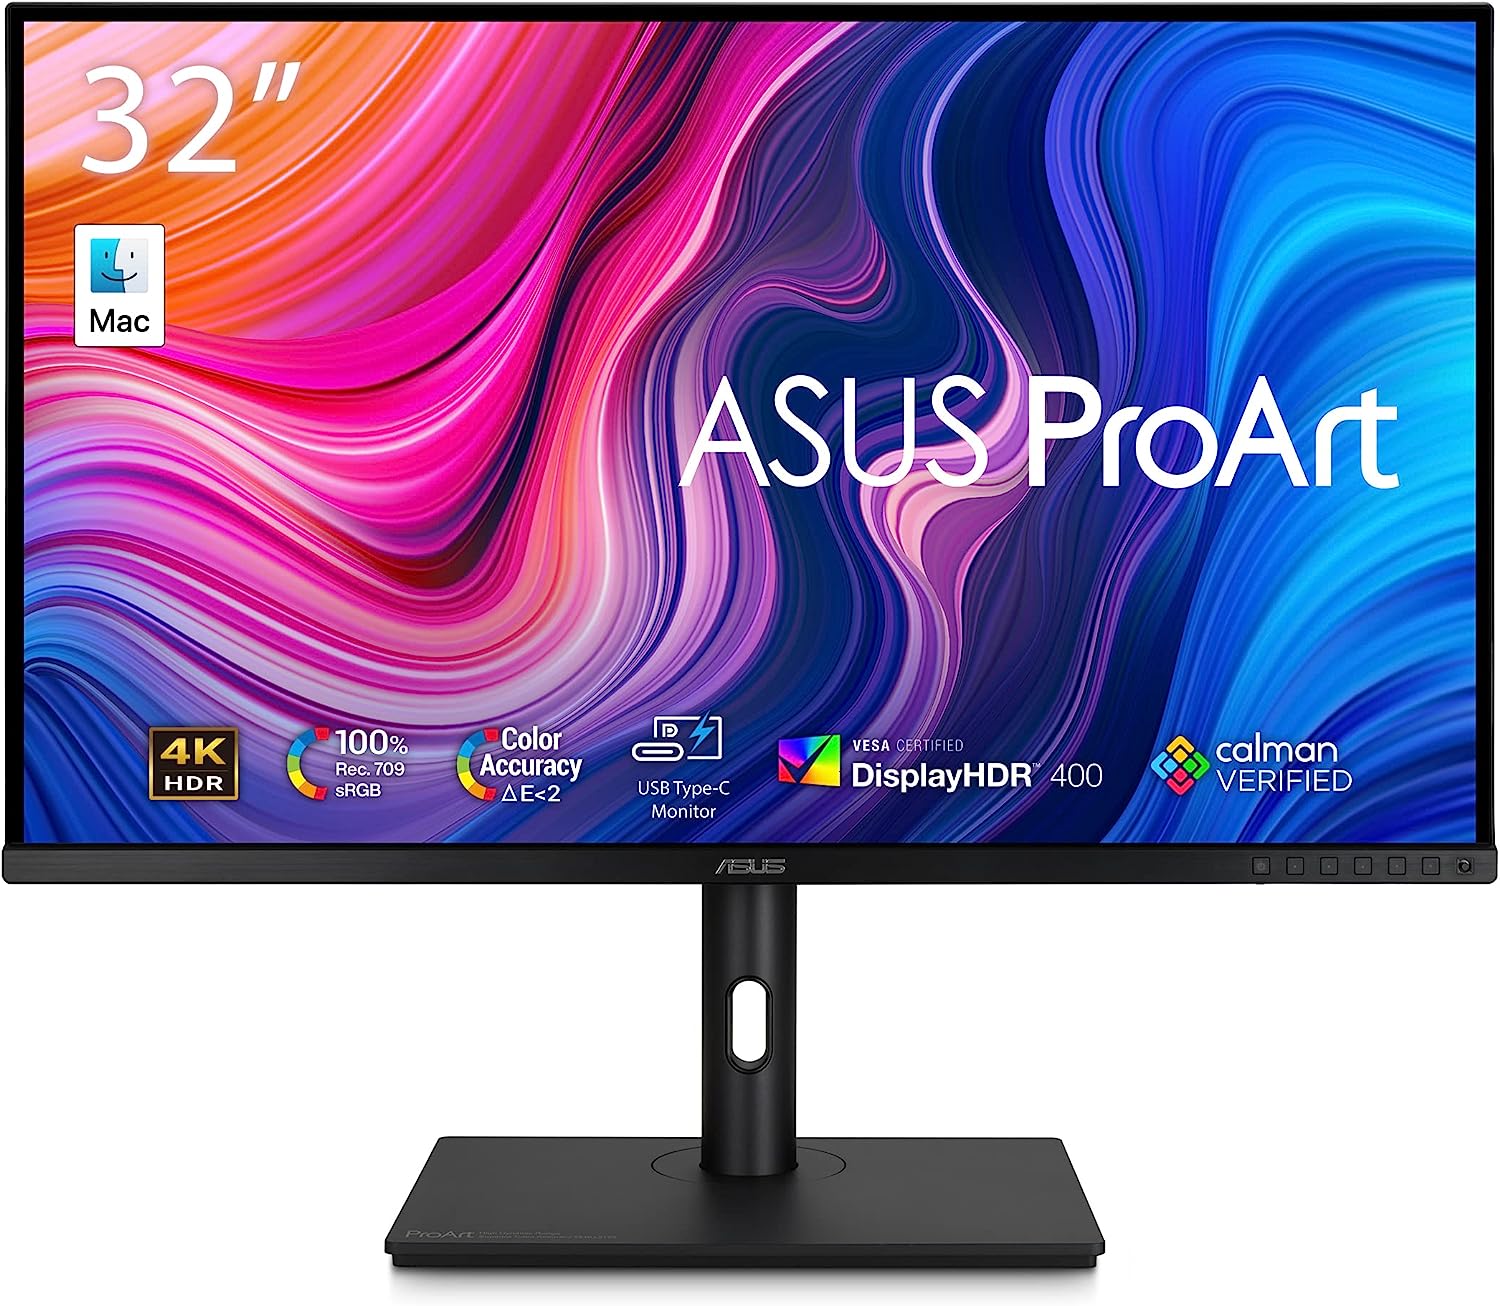 ASUS ProArt Display 32” 4K HDR Computer Monitor [...]